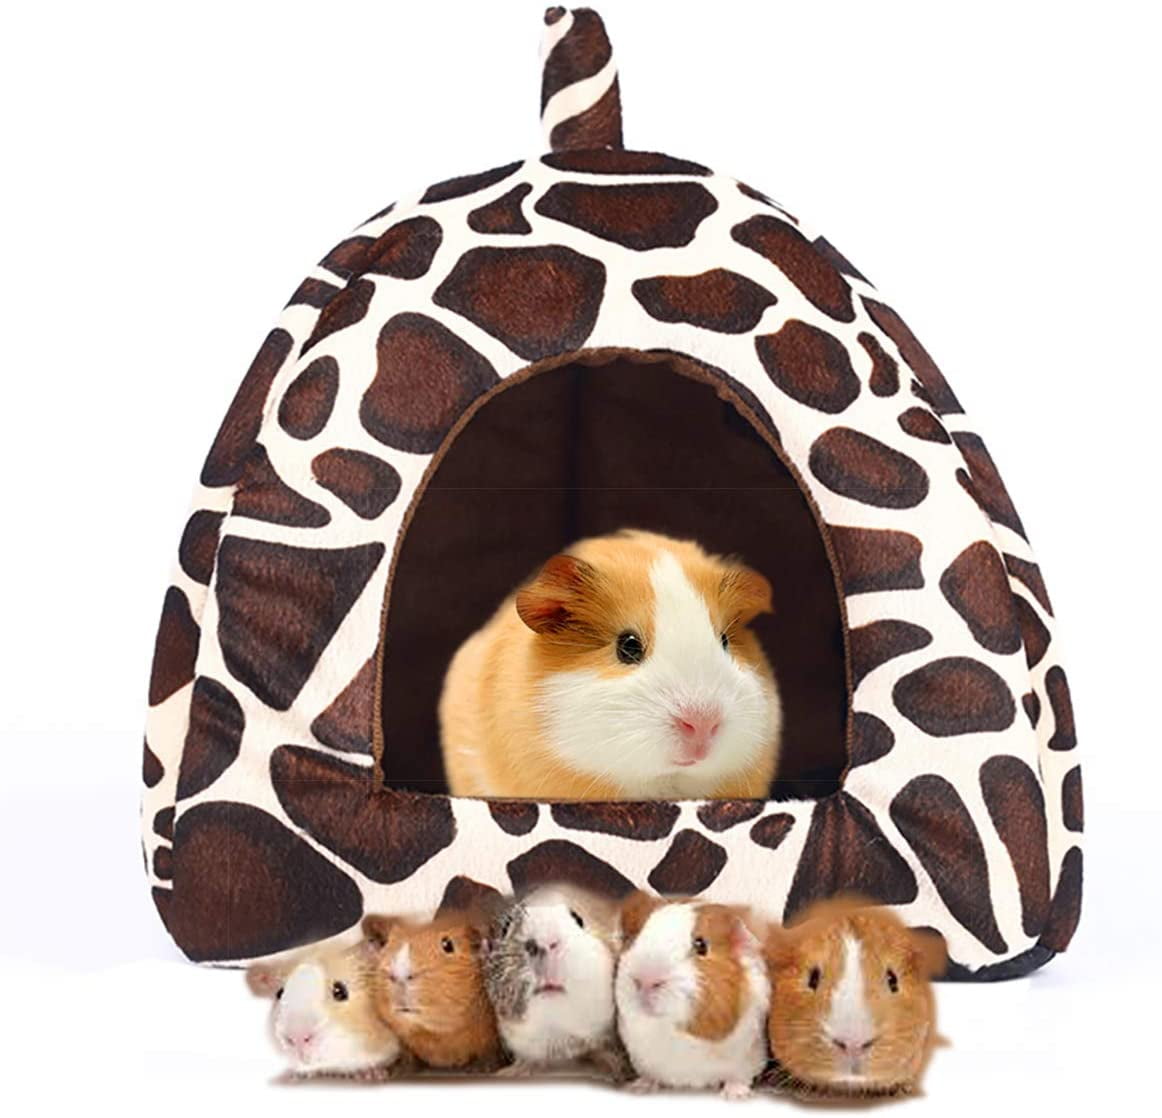 Spring Fever Rabbit Dog Cat Pet Bed Small Big Animal Puppy Supplies Indoor Water Resistant Beds 